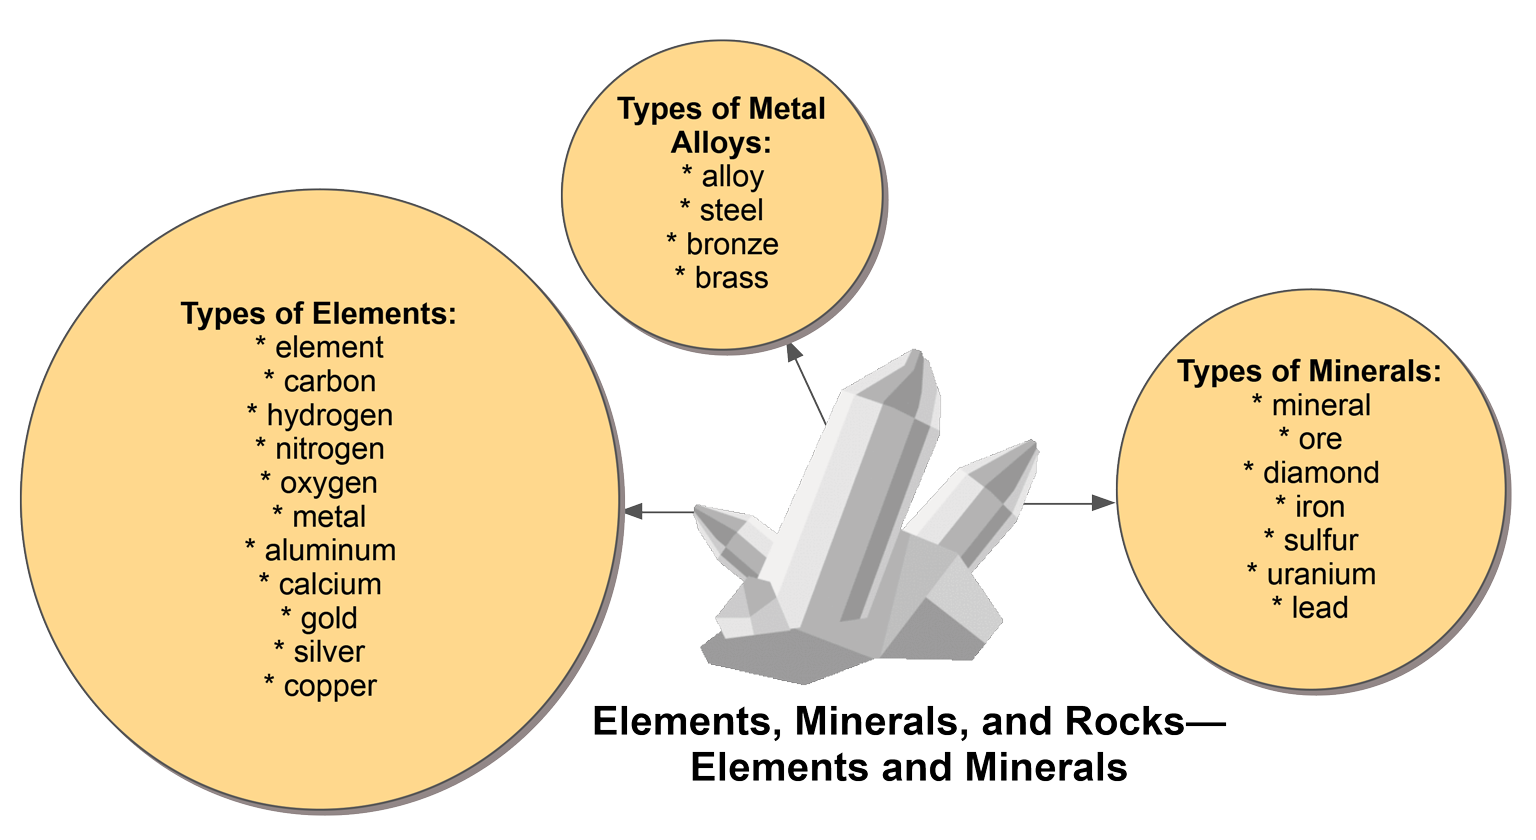 ELEMENTS-Elements-and-Minerals.png